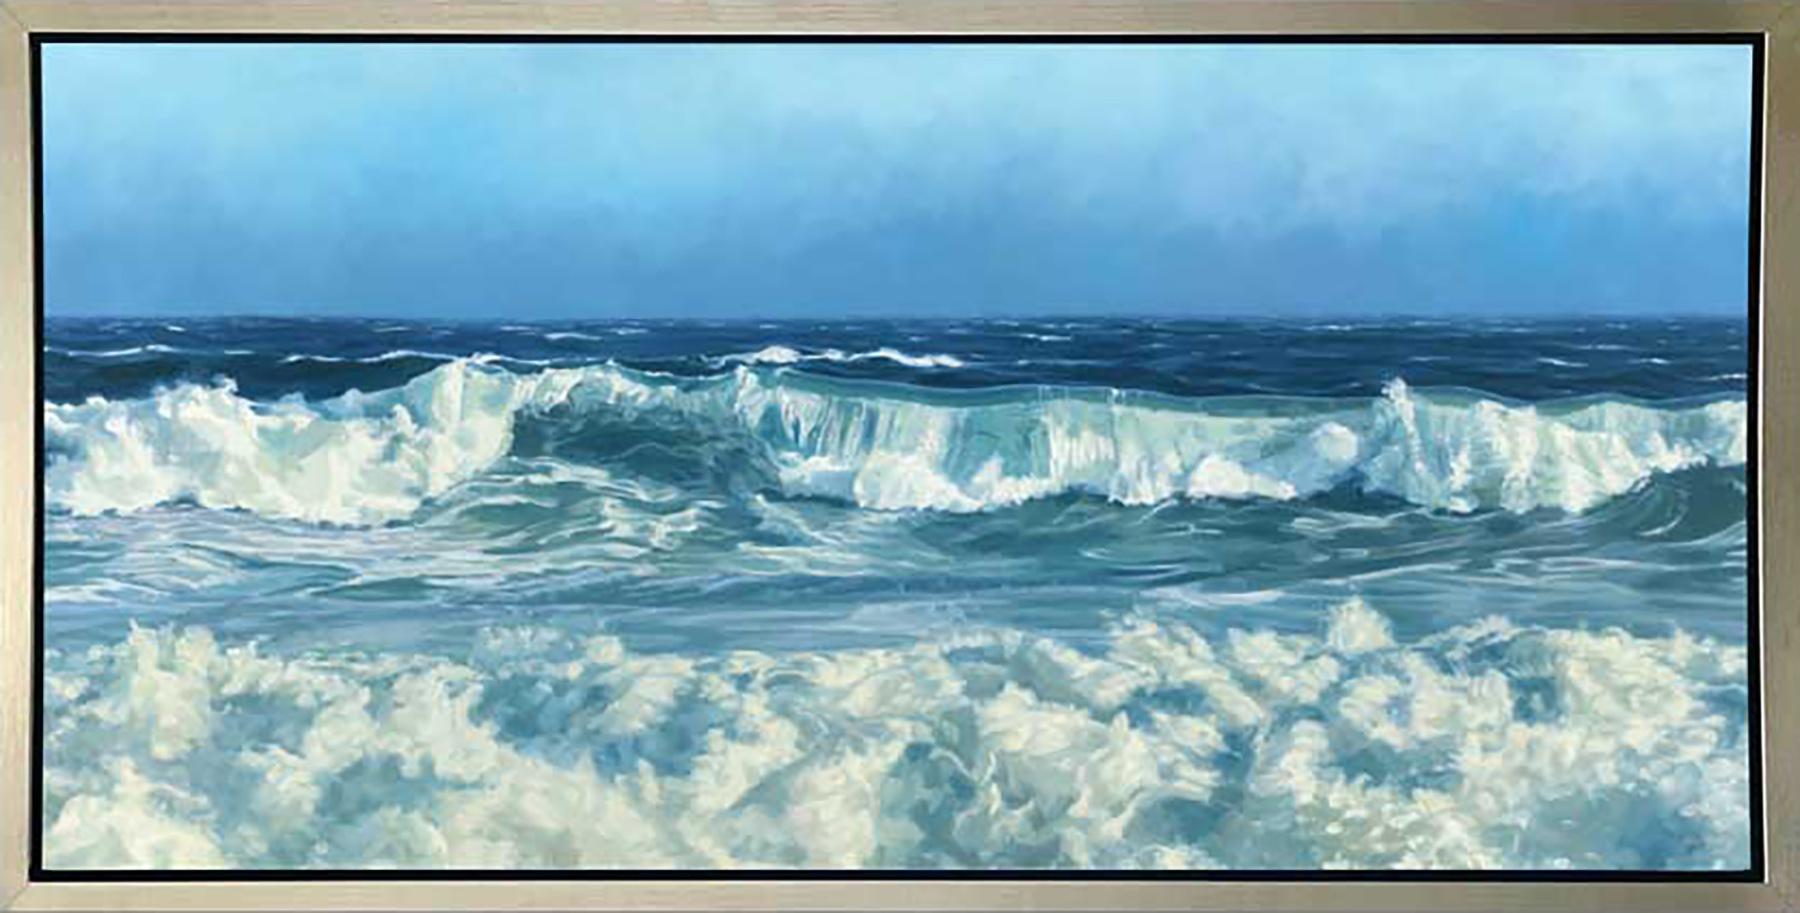 John Harris (painter) Landscape Print - "Oceanic, " Limited Edition Giclee Print, 16" x 32"